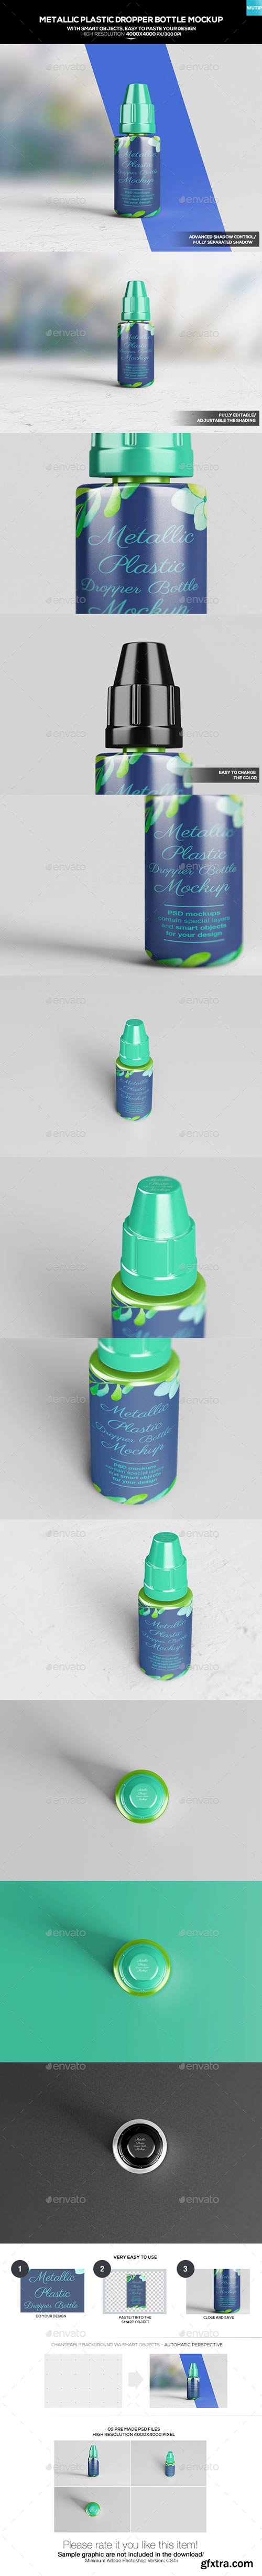 Graphicriver - Metallic Plastic Dropper Bottle Mockup 20206340